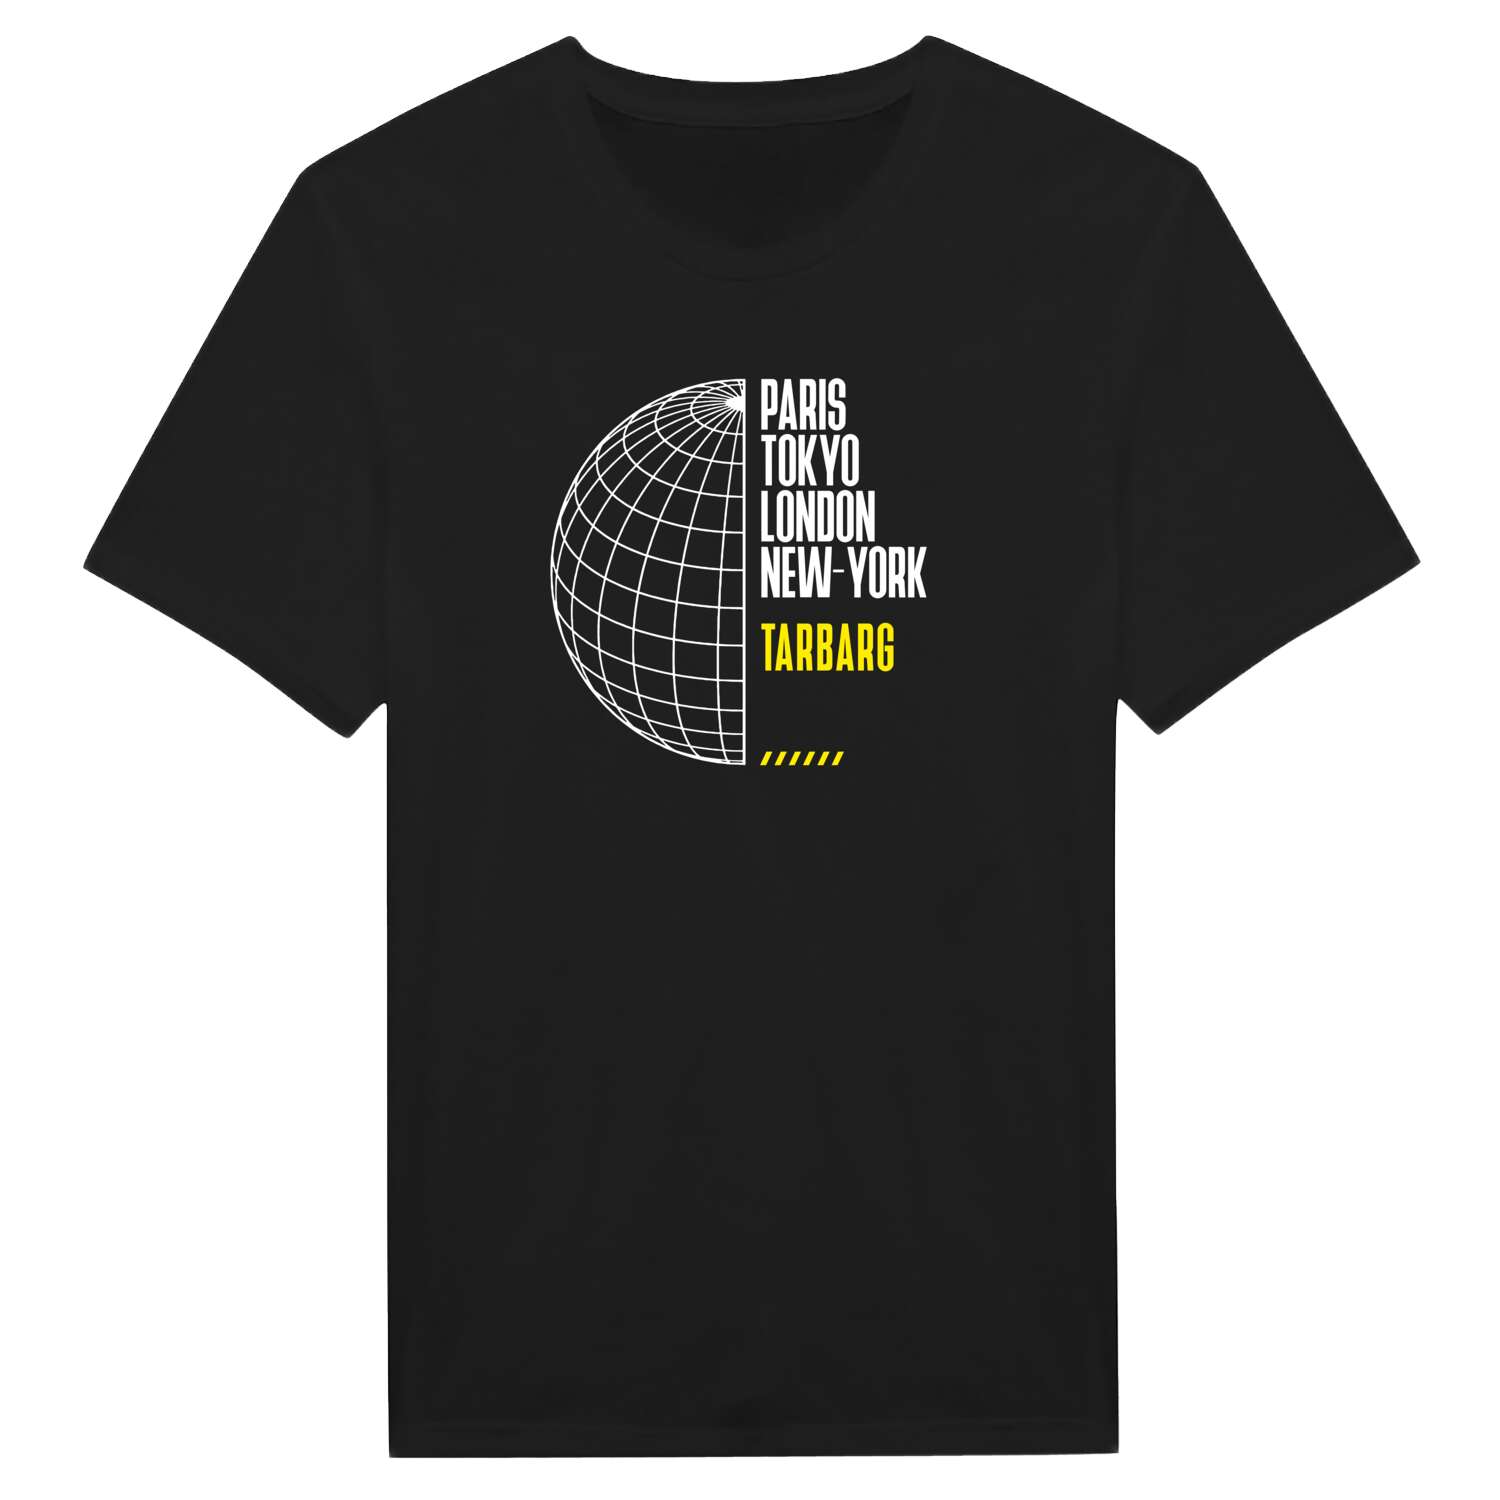 Tarbarg T-Shirt »Paris Tokyo London«